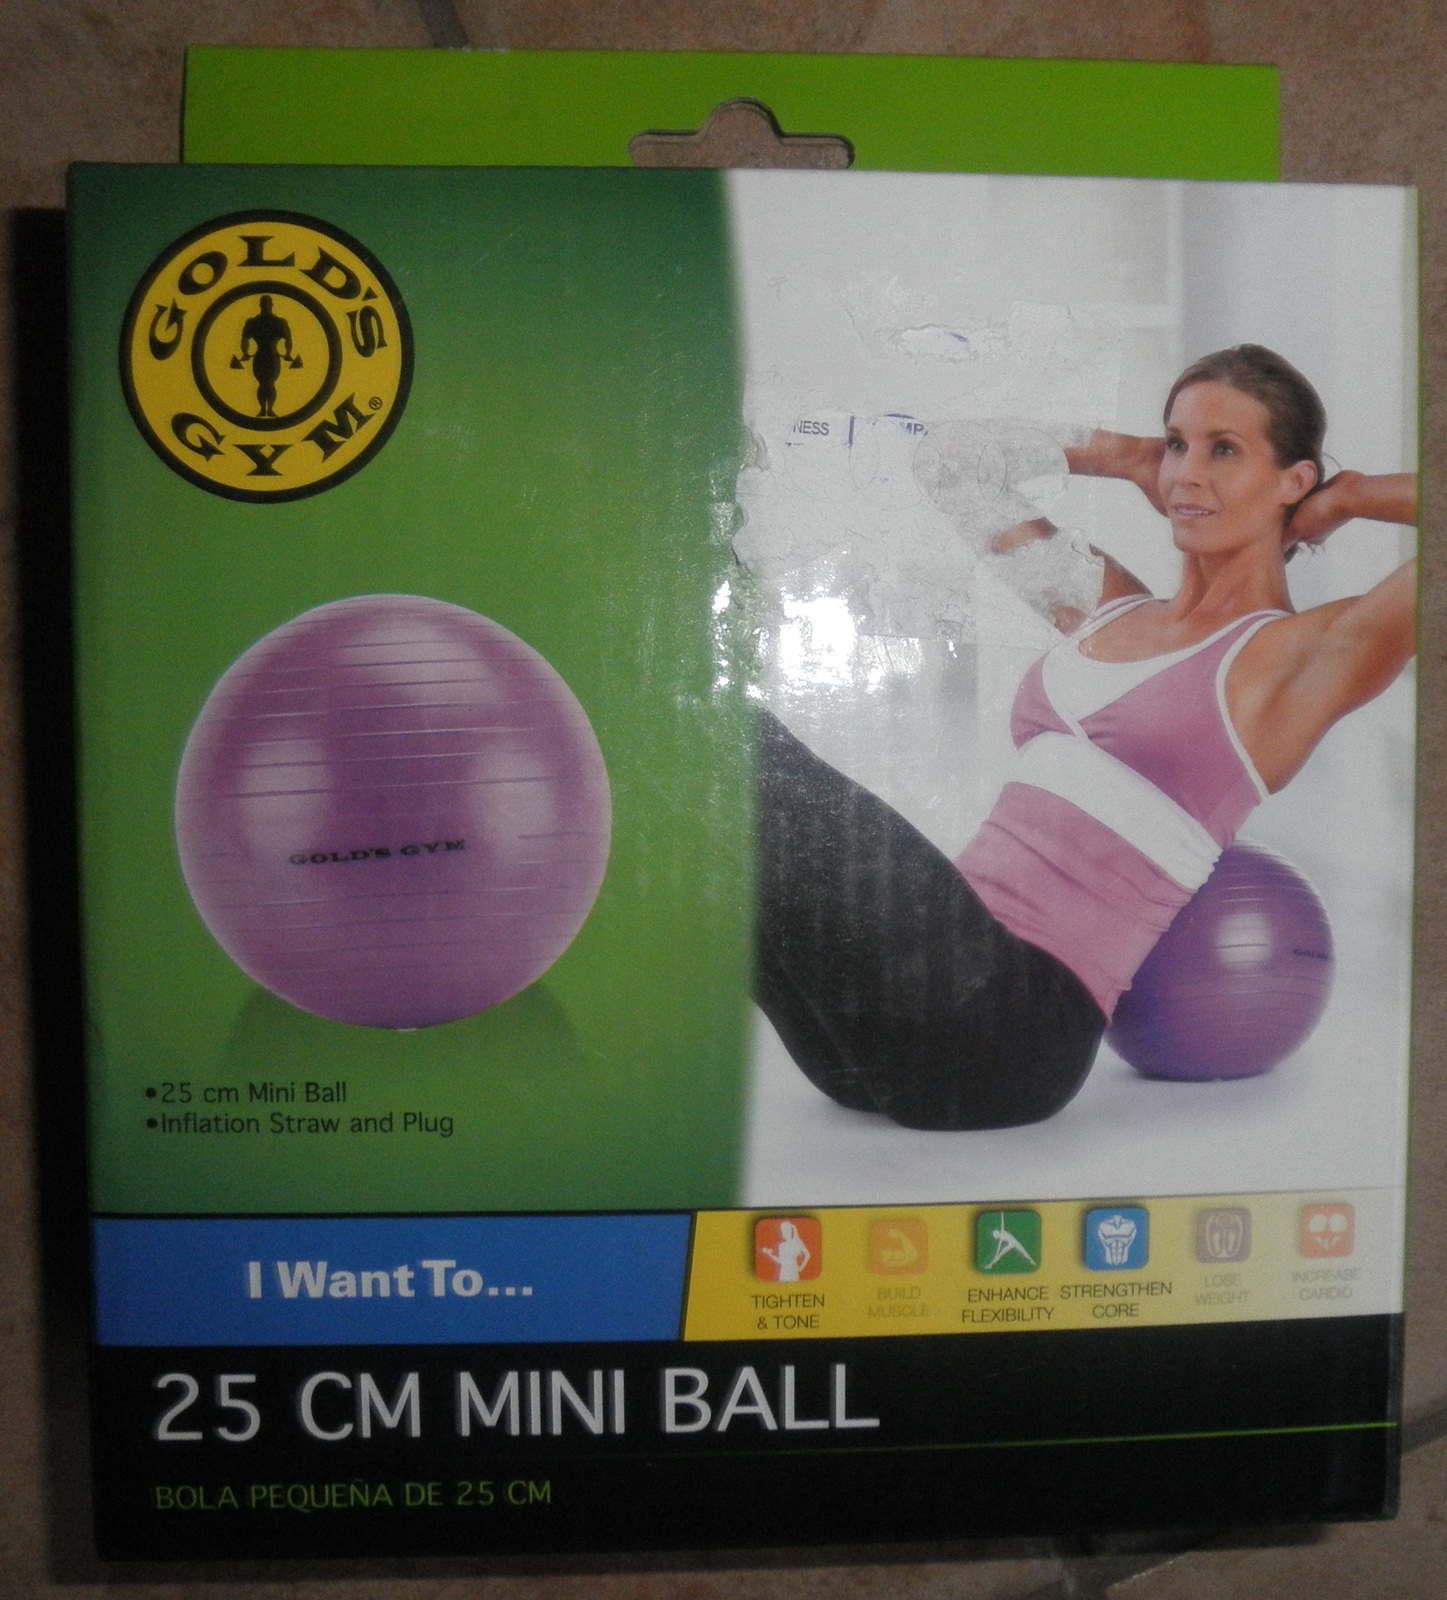 exercise ball  25 cm mini nib Gold's Gym brand - $25.99